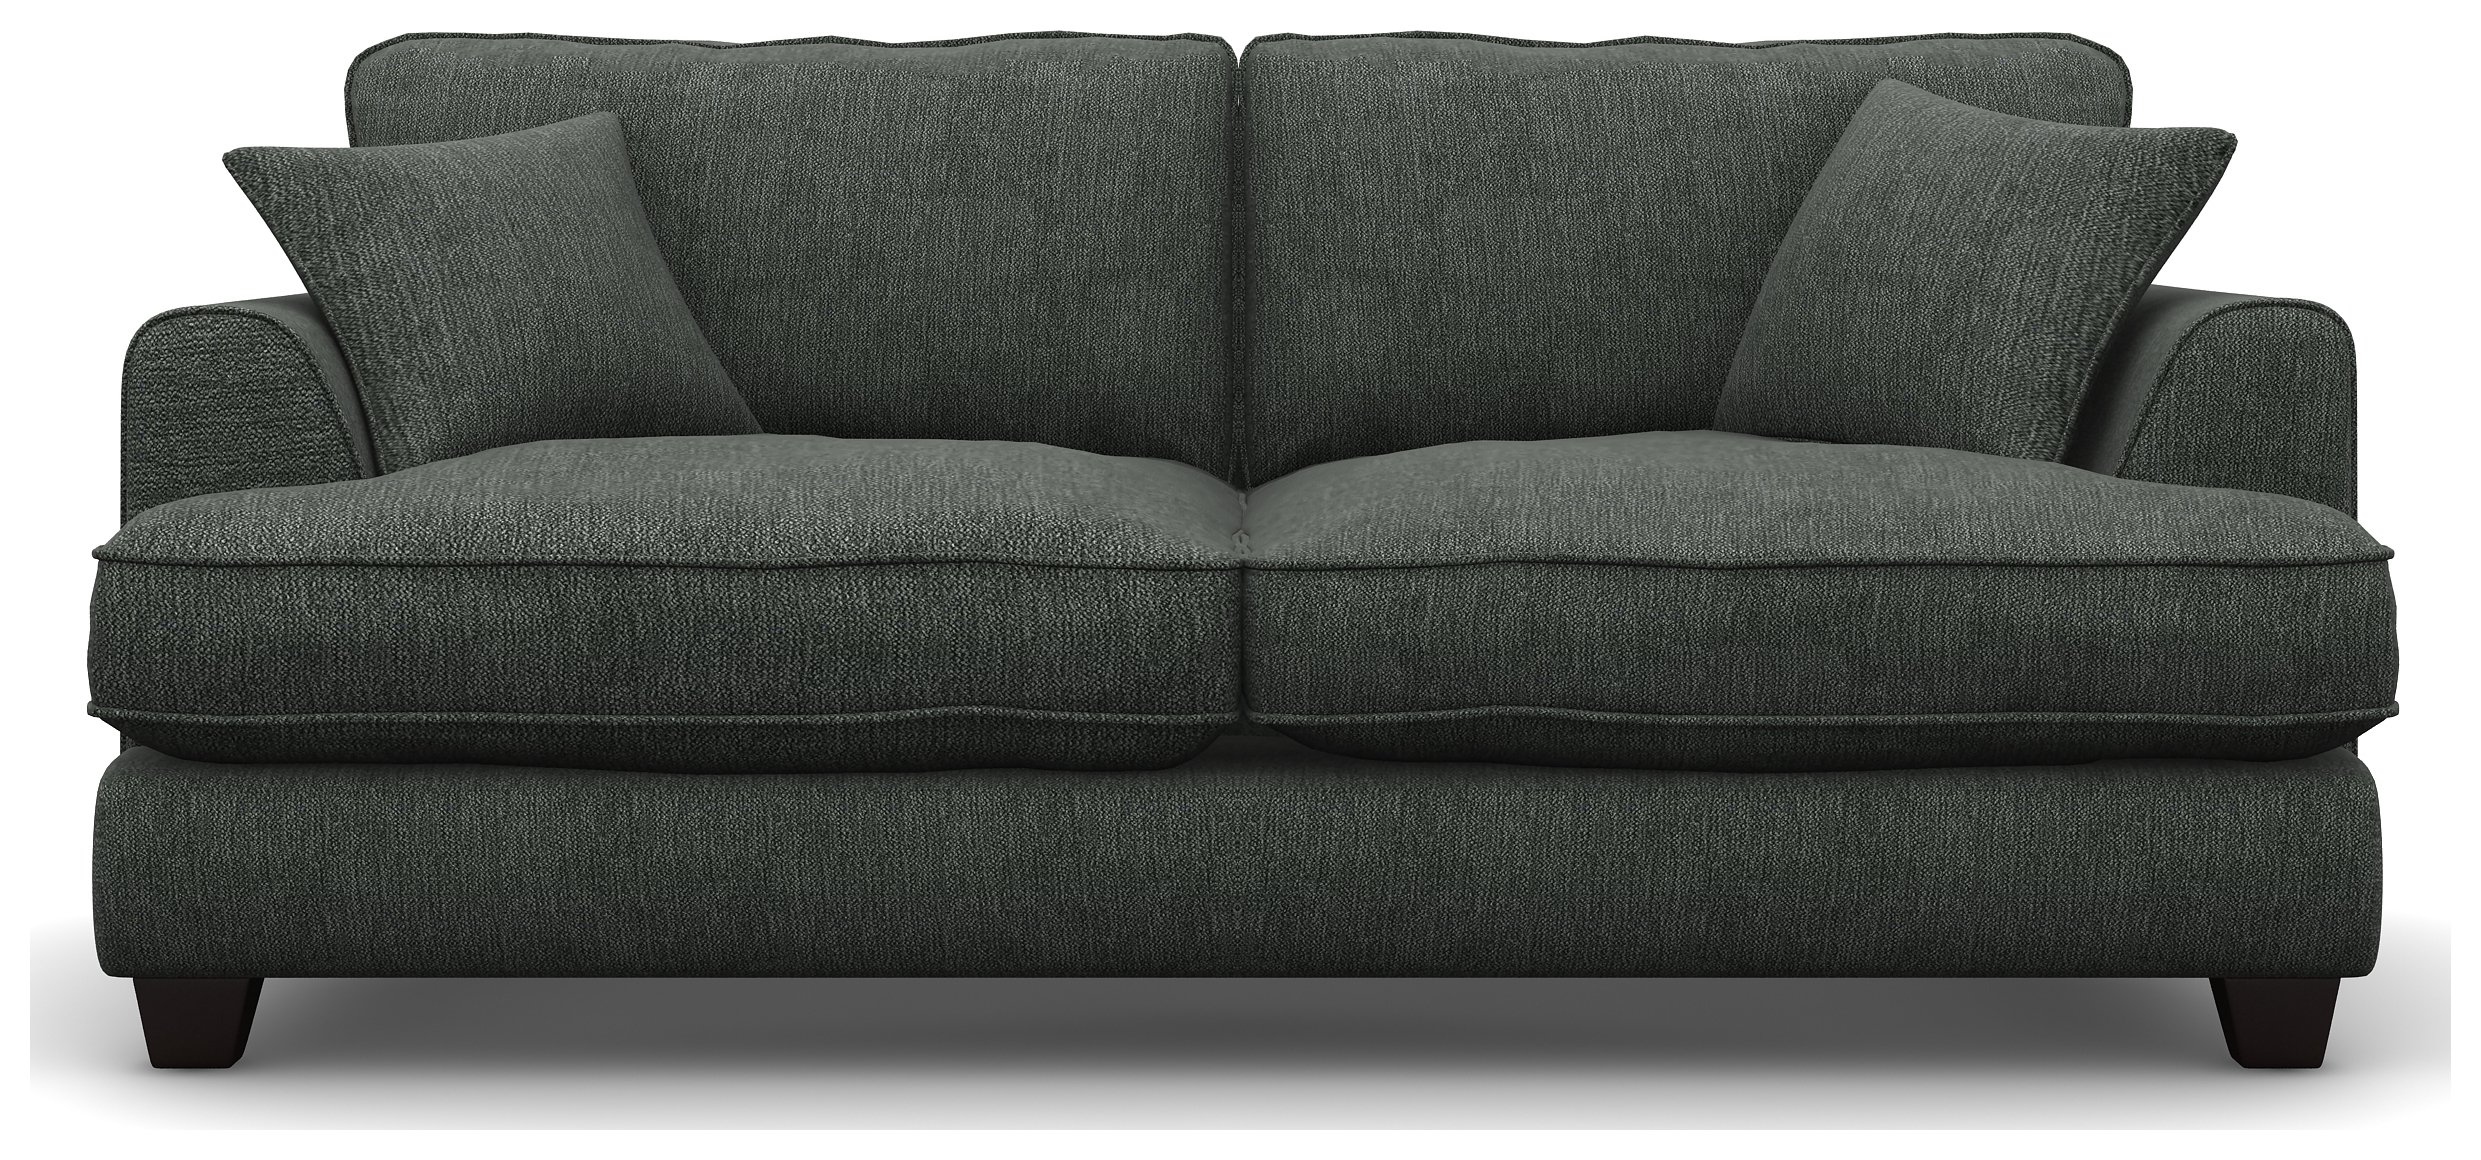 Argos Home Hampstead 3 Seater Fabric Sofa - Pewter